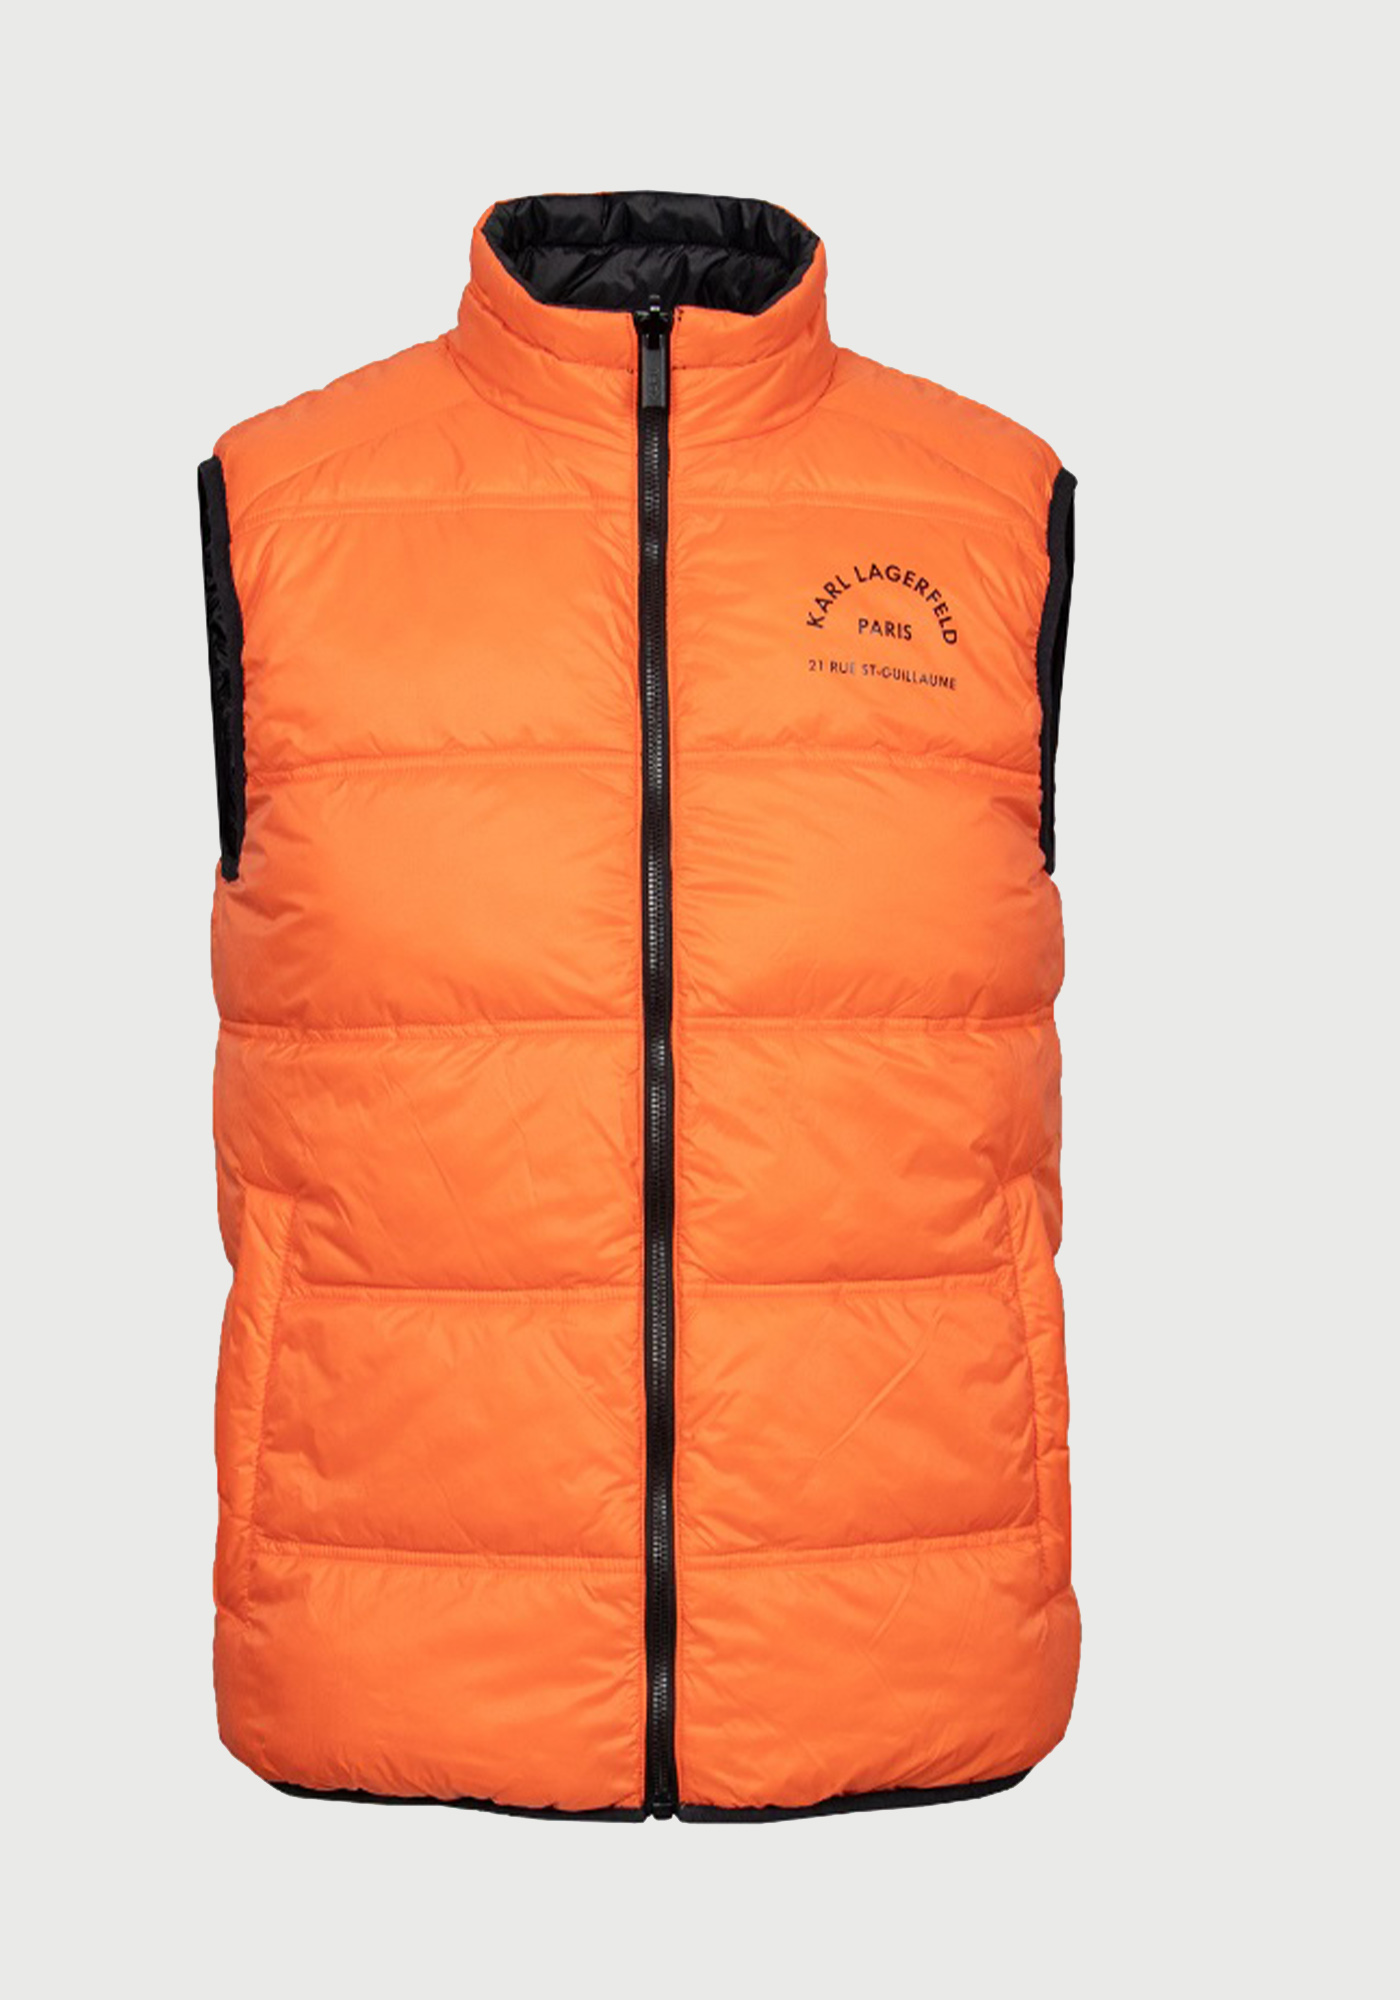 Karl Lagerfeld Διπλής όψεως Αμάνικο της σειράς Vest Rev - 505401 531591 917 Black/ Orange